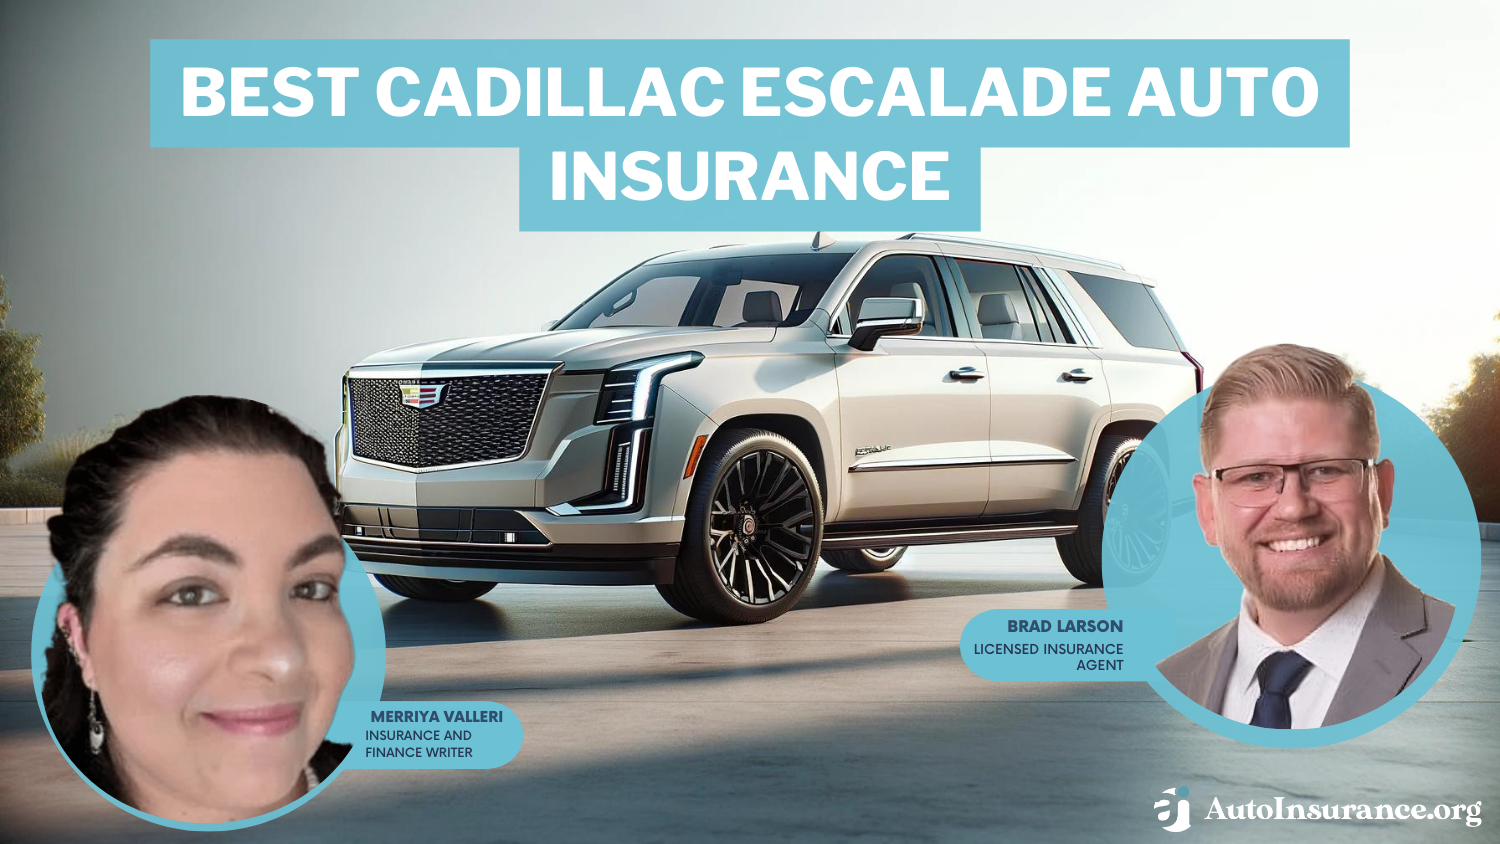 Best Cadillac Escalade Auto Insurance: Allstate, Erie, Geico